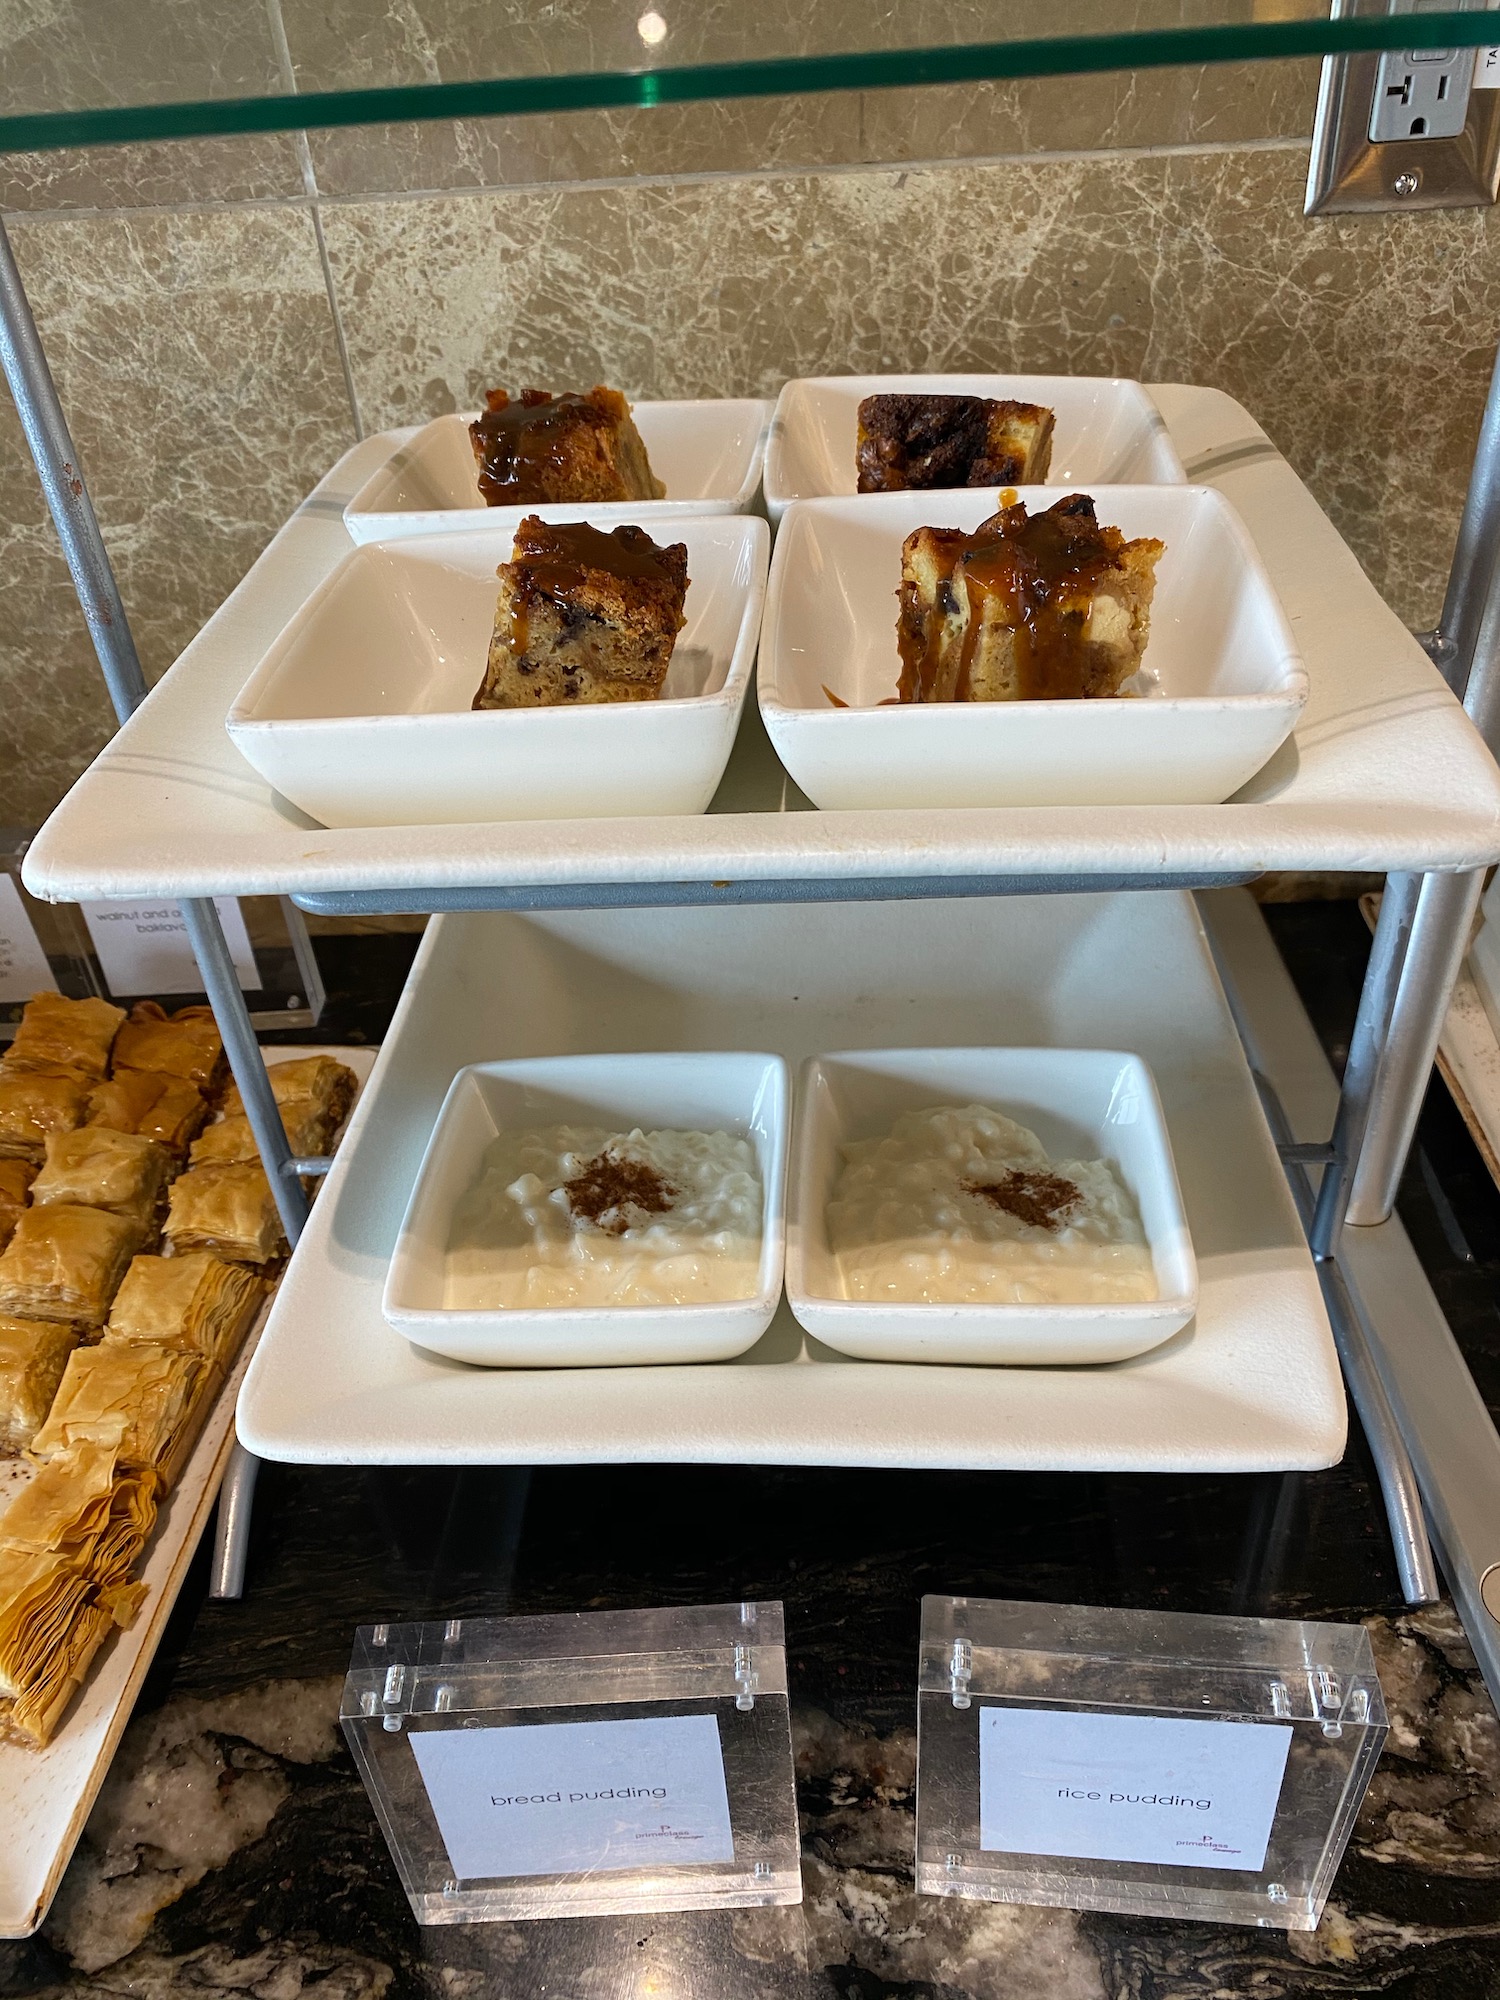 a tray of desserts on a shelf